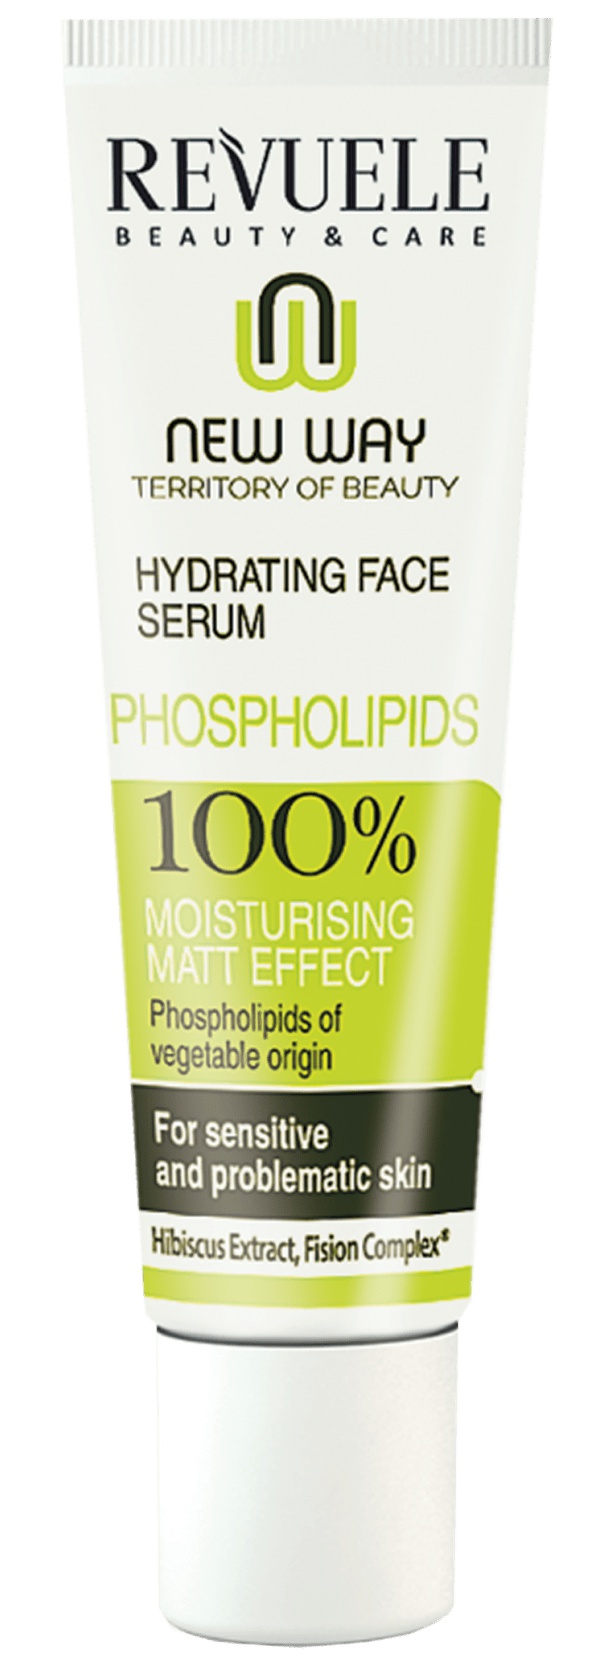 Revuele New Way Hydrating Face Serum Phospholipids